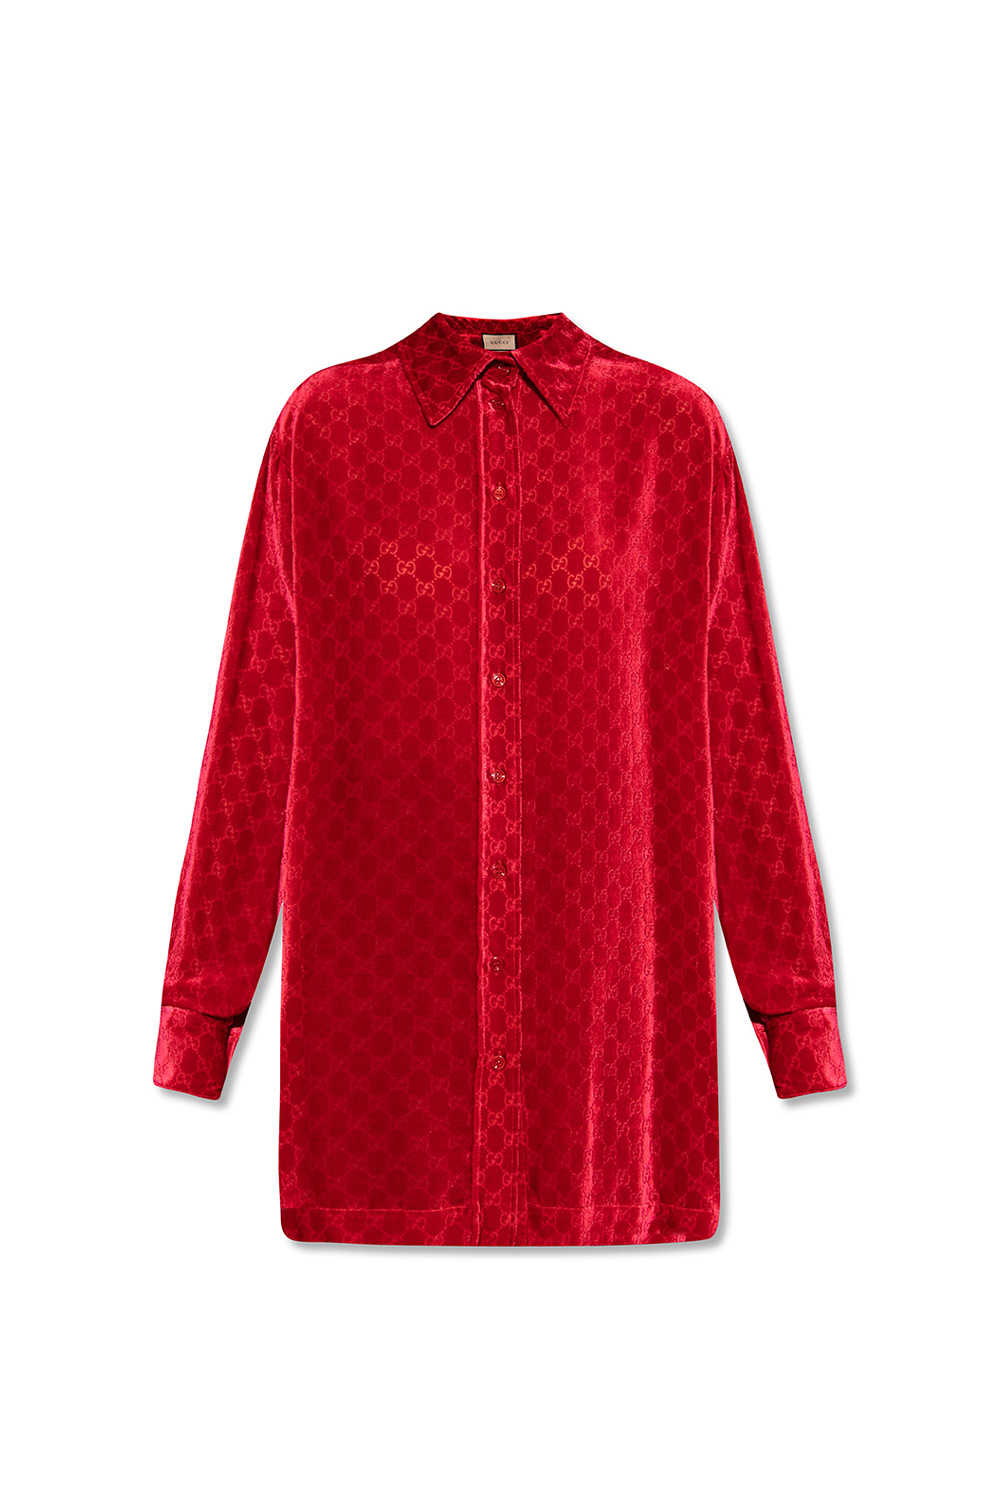 GenesinlifeShops Canada - Red Velour shirt Gucci - denim jacket 